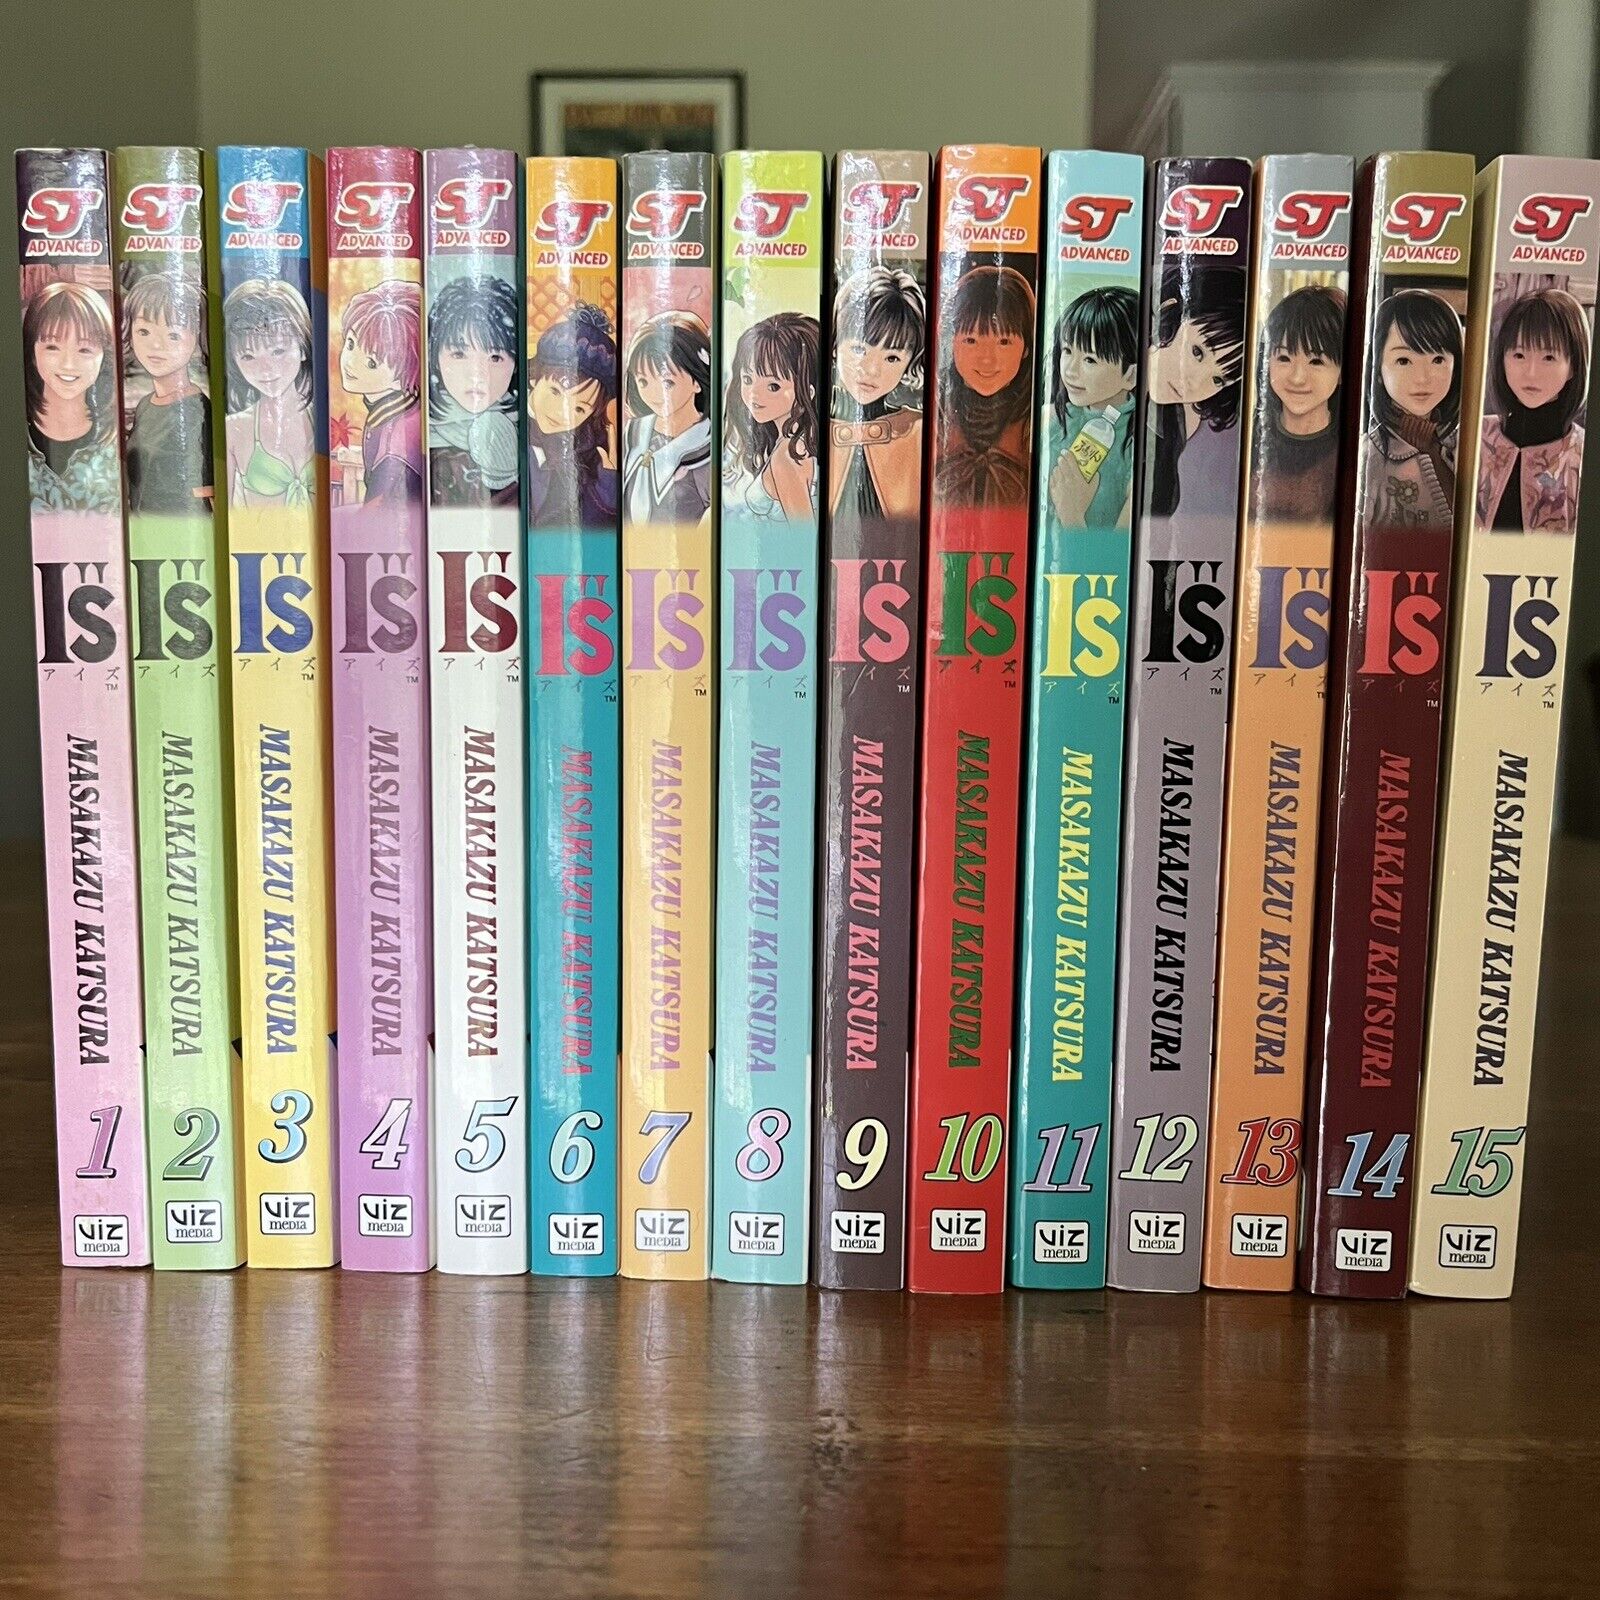 Is I”s Vol 1-15 Complete Manga Masakazu Katsura Shonen Jump Advanced Teen Drama